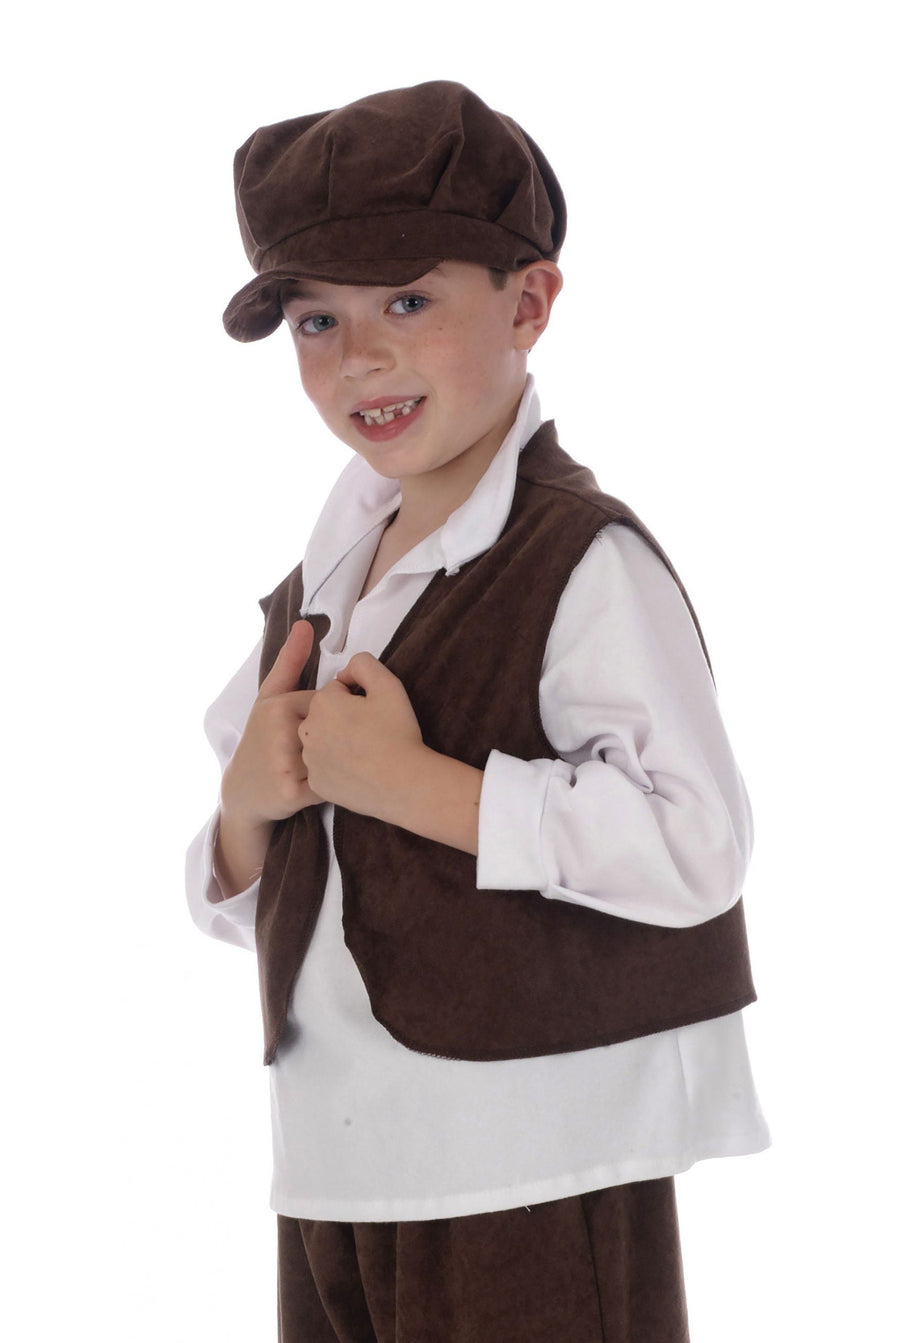 Boys Urchin Waistcoat Childs+b1628 Costume Accessories Male Halloween_1